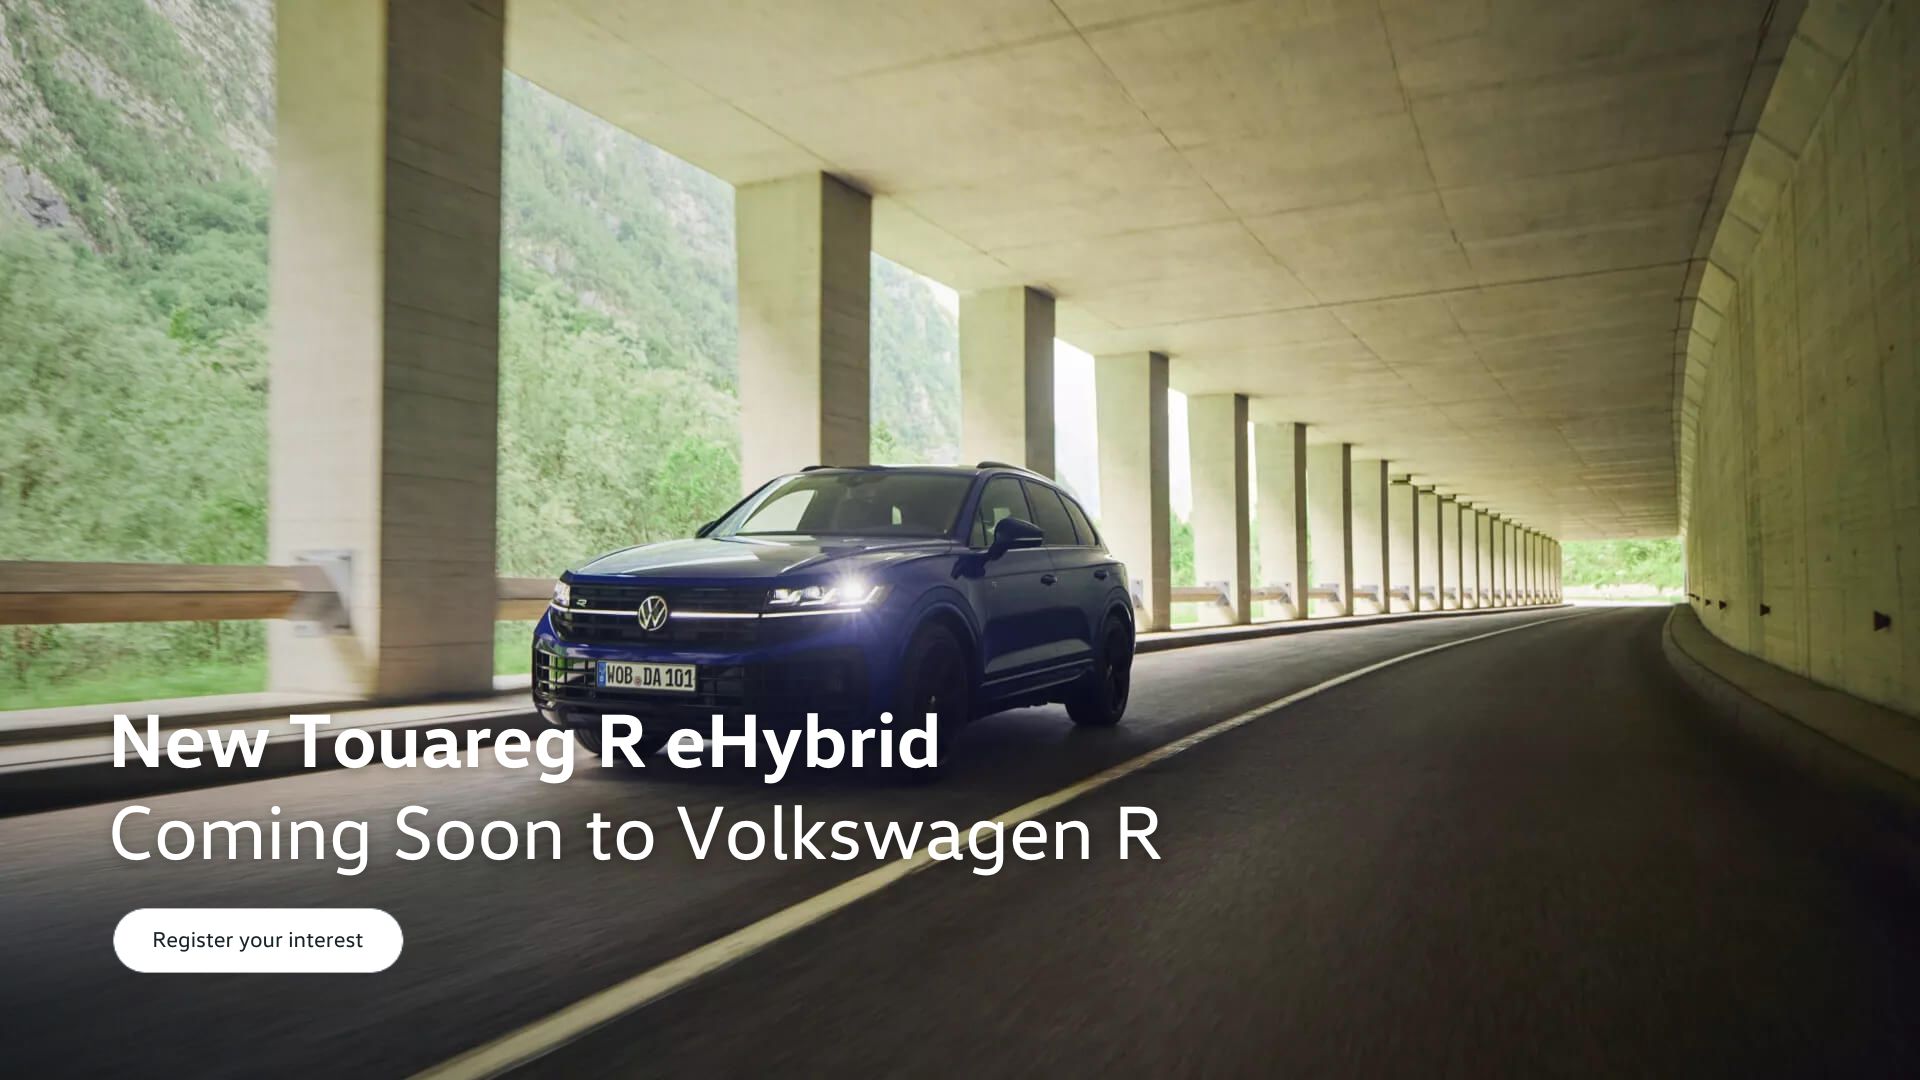 New Touareg R eHybrid | Coming Soon to Volkswagen Rmodels/volkswagen-newtouaregr/